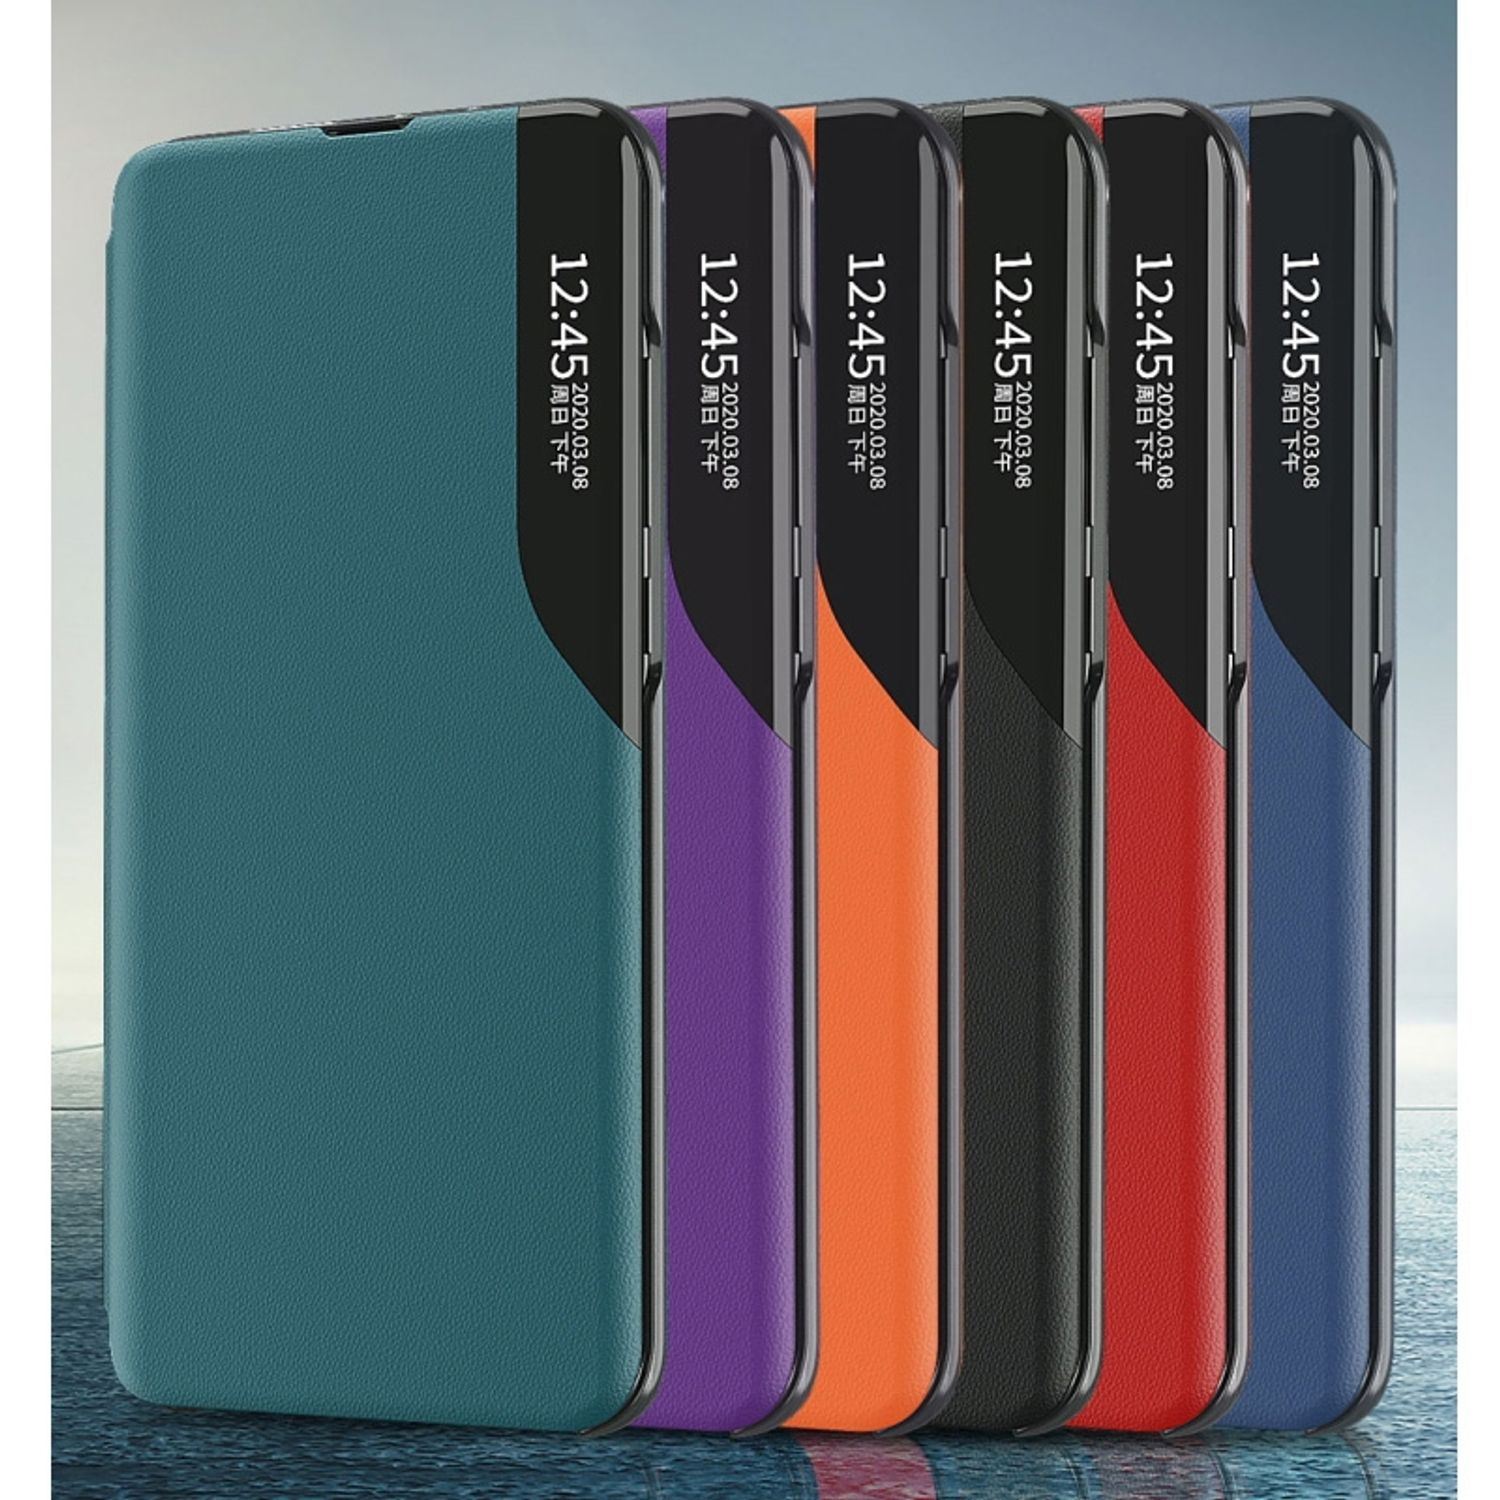 Case, Galaxy KÖNIG Cover, A32 Samsung, Orange 5G, Full DESIGN